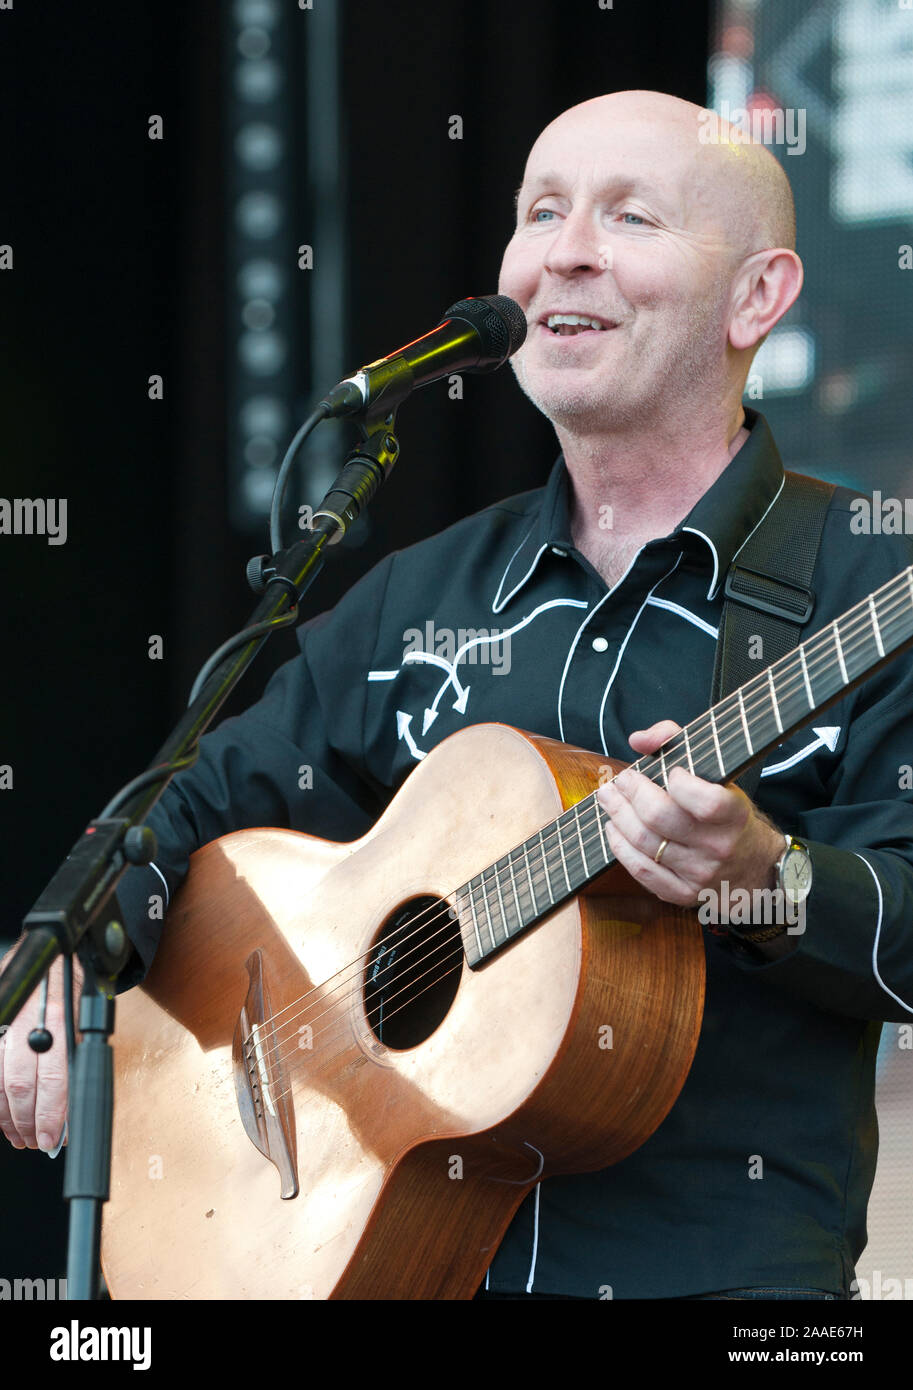 Irish singer/songwriter Kieran Goss performing at Fairport Convention's Cropredy festival, UK, August 9, 2012 Stock Photo